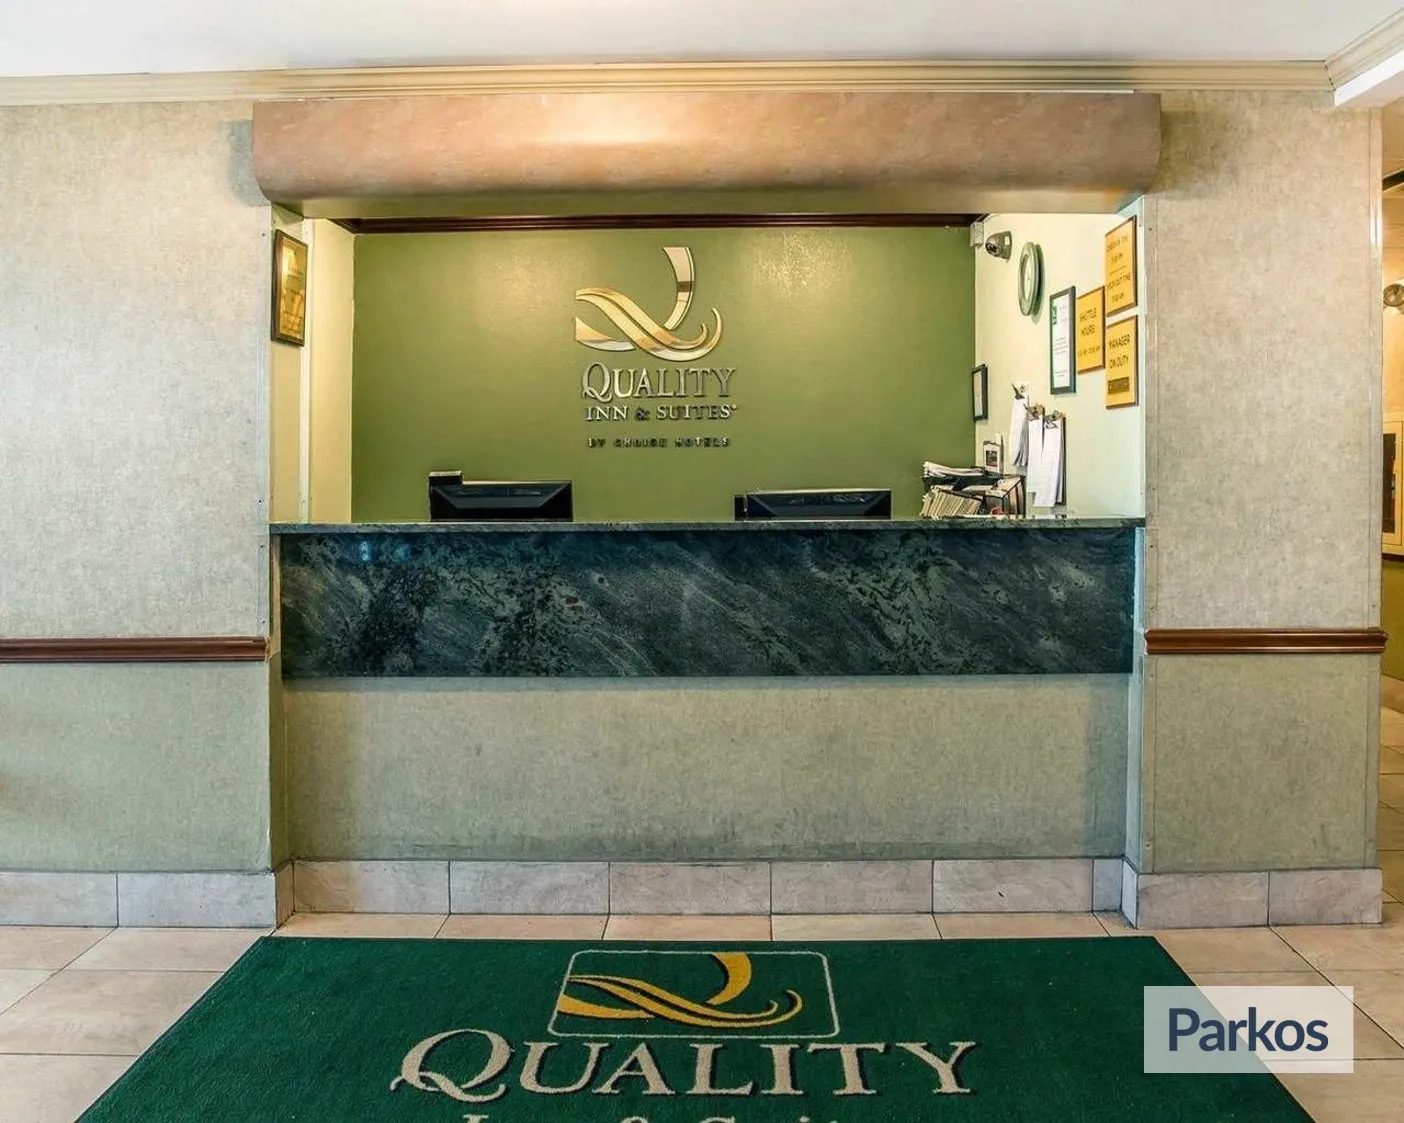 Quality Inn & Suites (CVG) - CVG Parking - picture 1